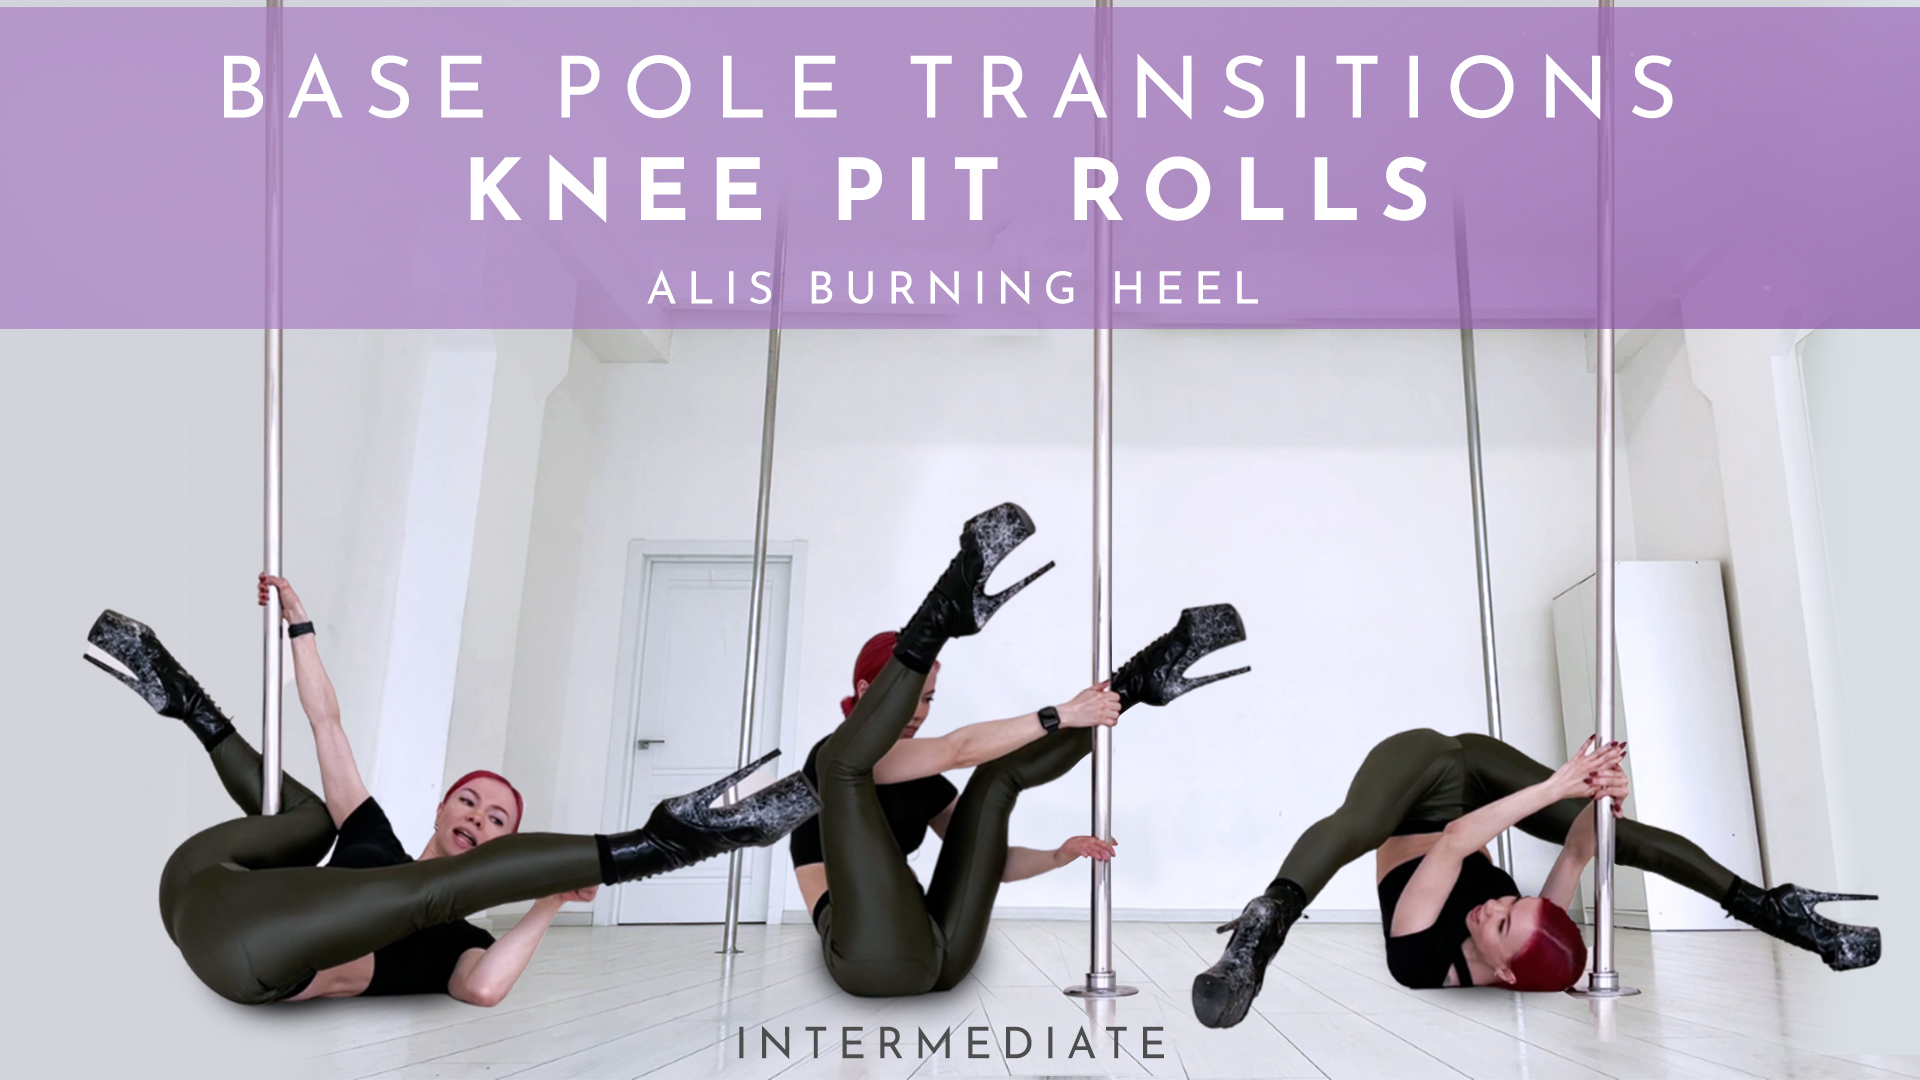 Knee Pit Rolls